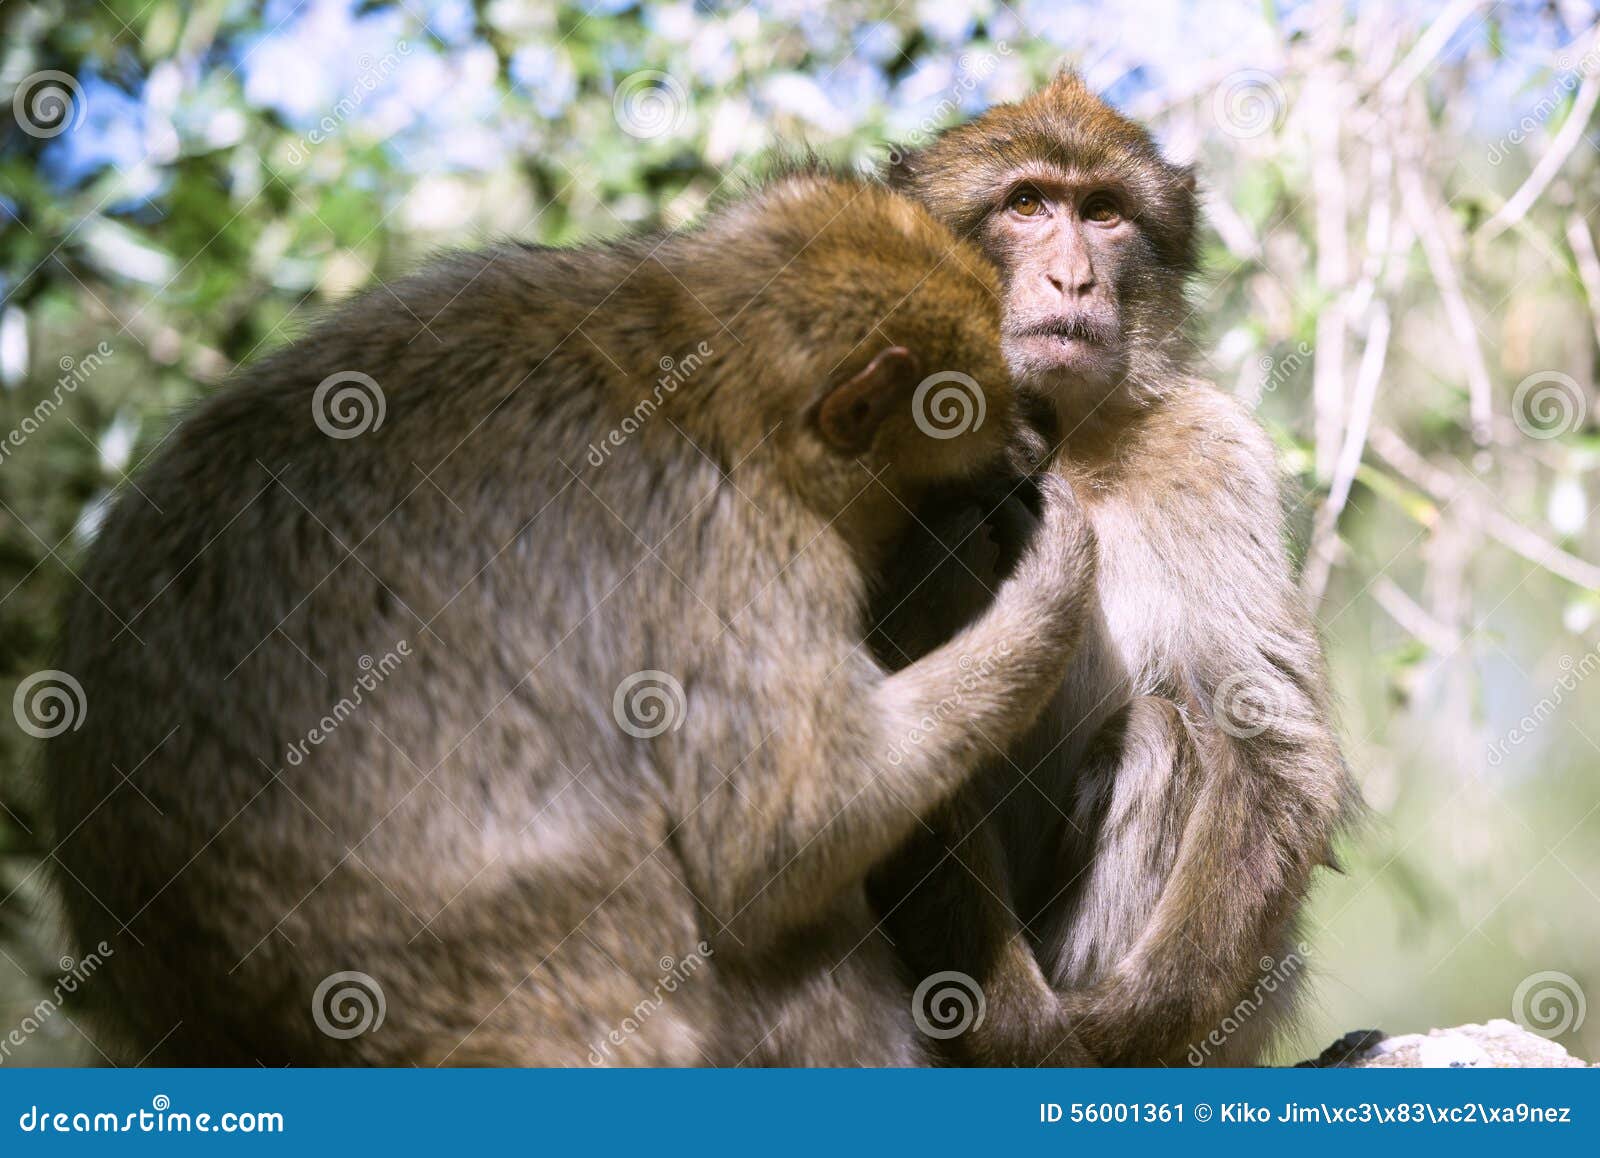 barbary macaque